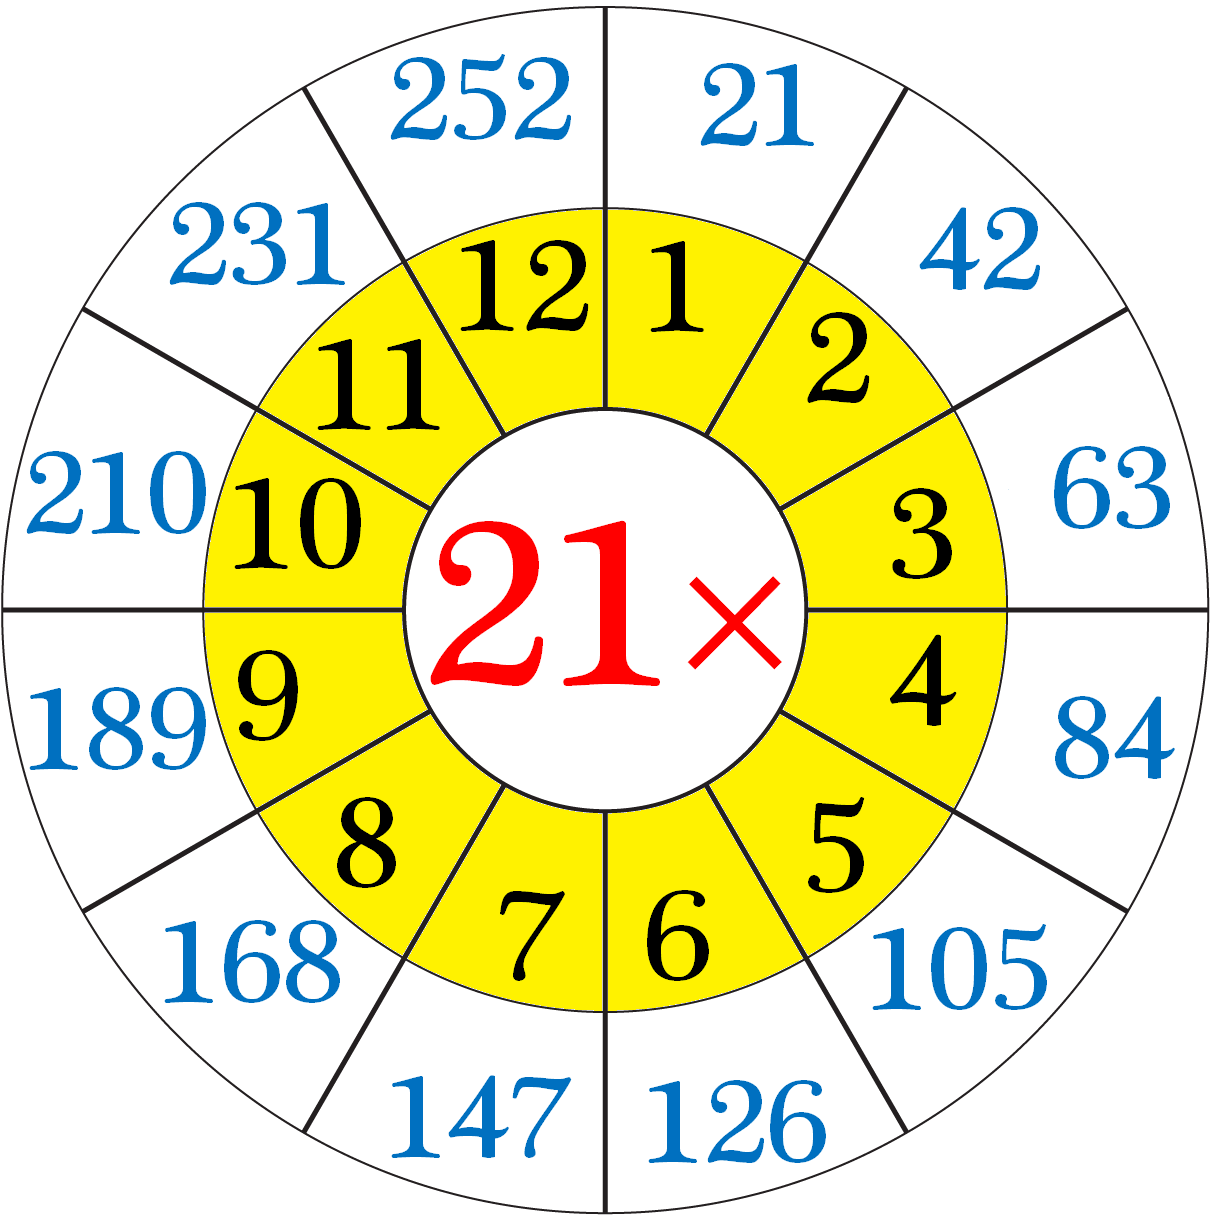 Multiplication Table of Twenty-One